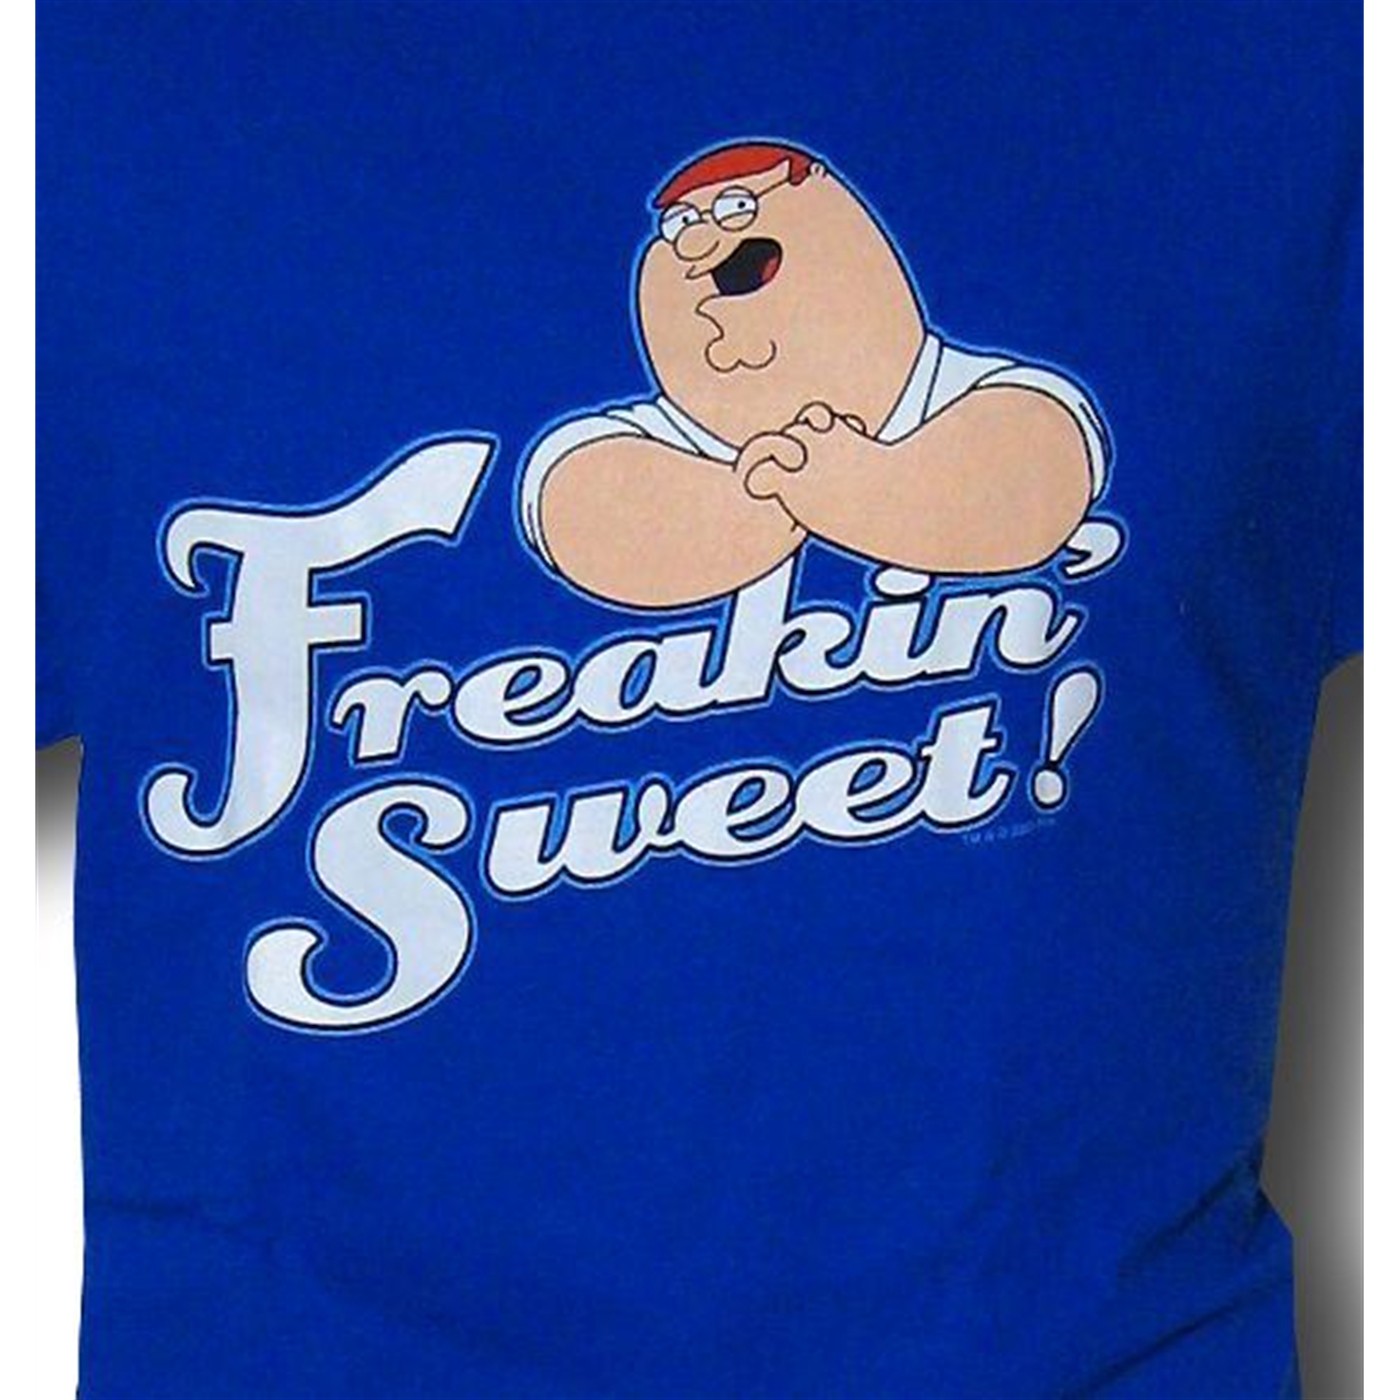 The Family Guy Peter Freakin' Sweet T-Shirt